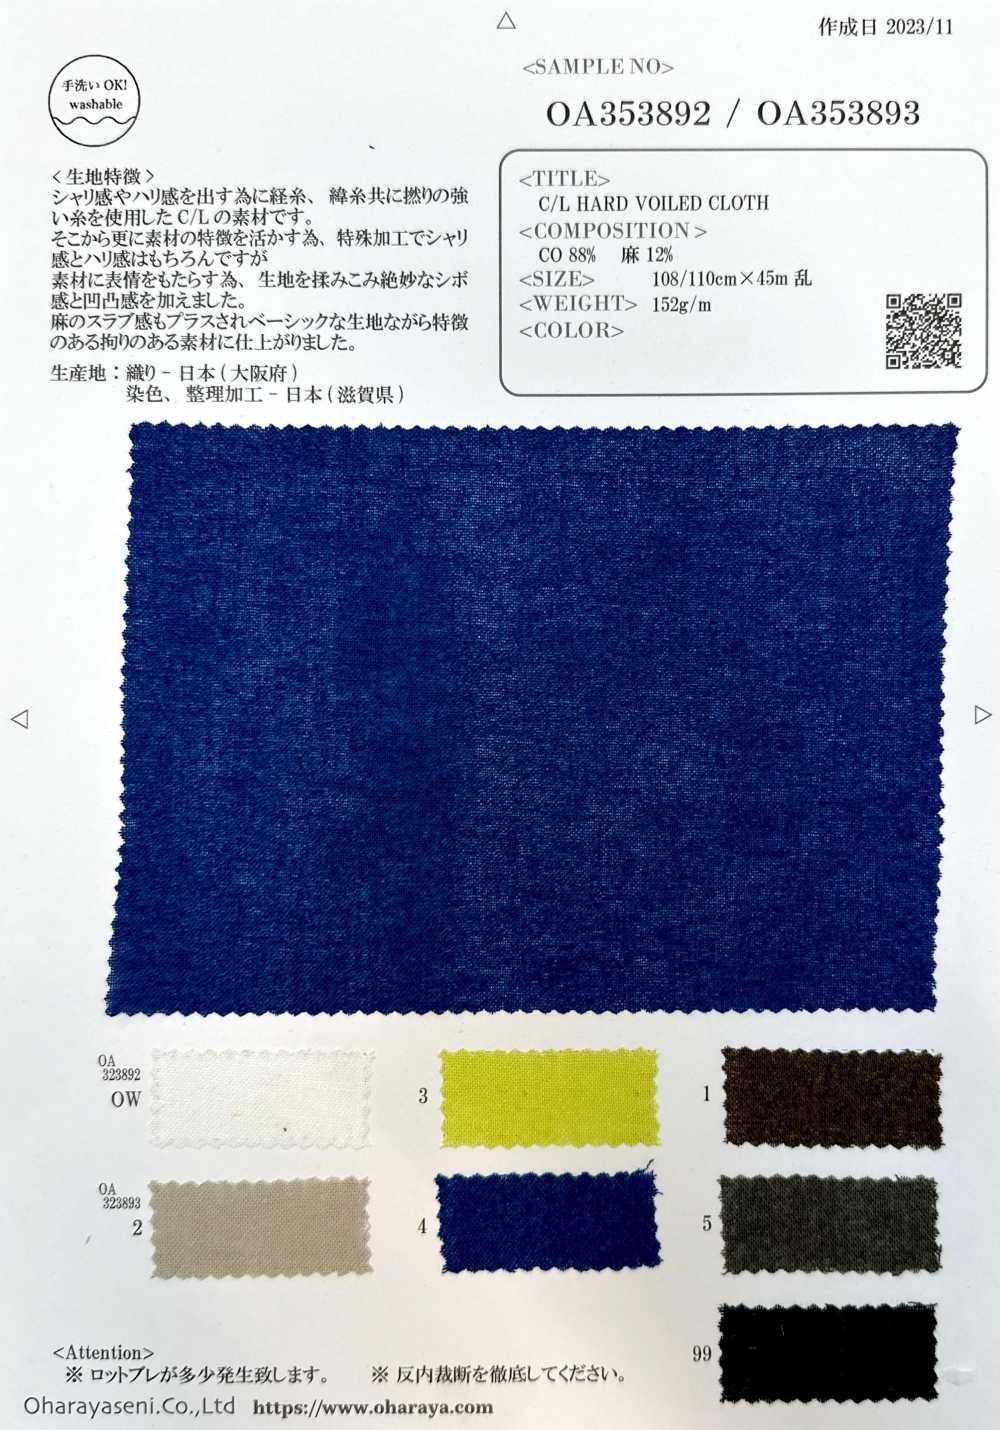 OA353893 C/L PAÑO VOILADO DURO[Fabrica Textil] Oharayaseni